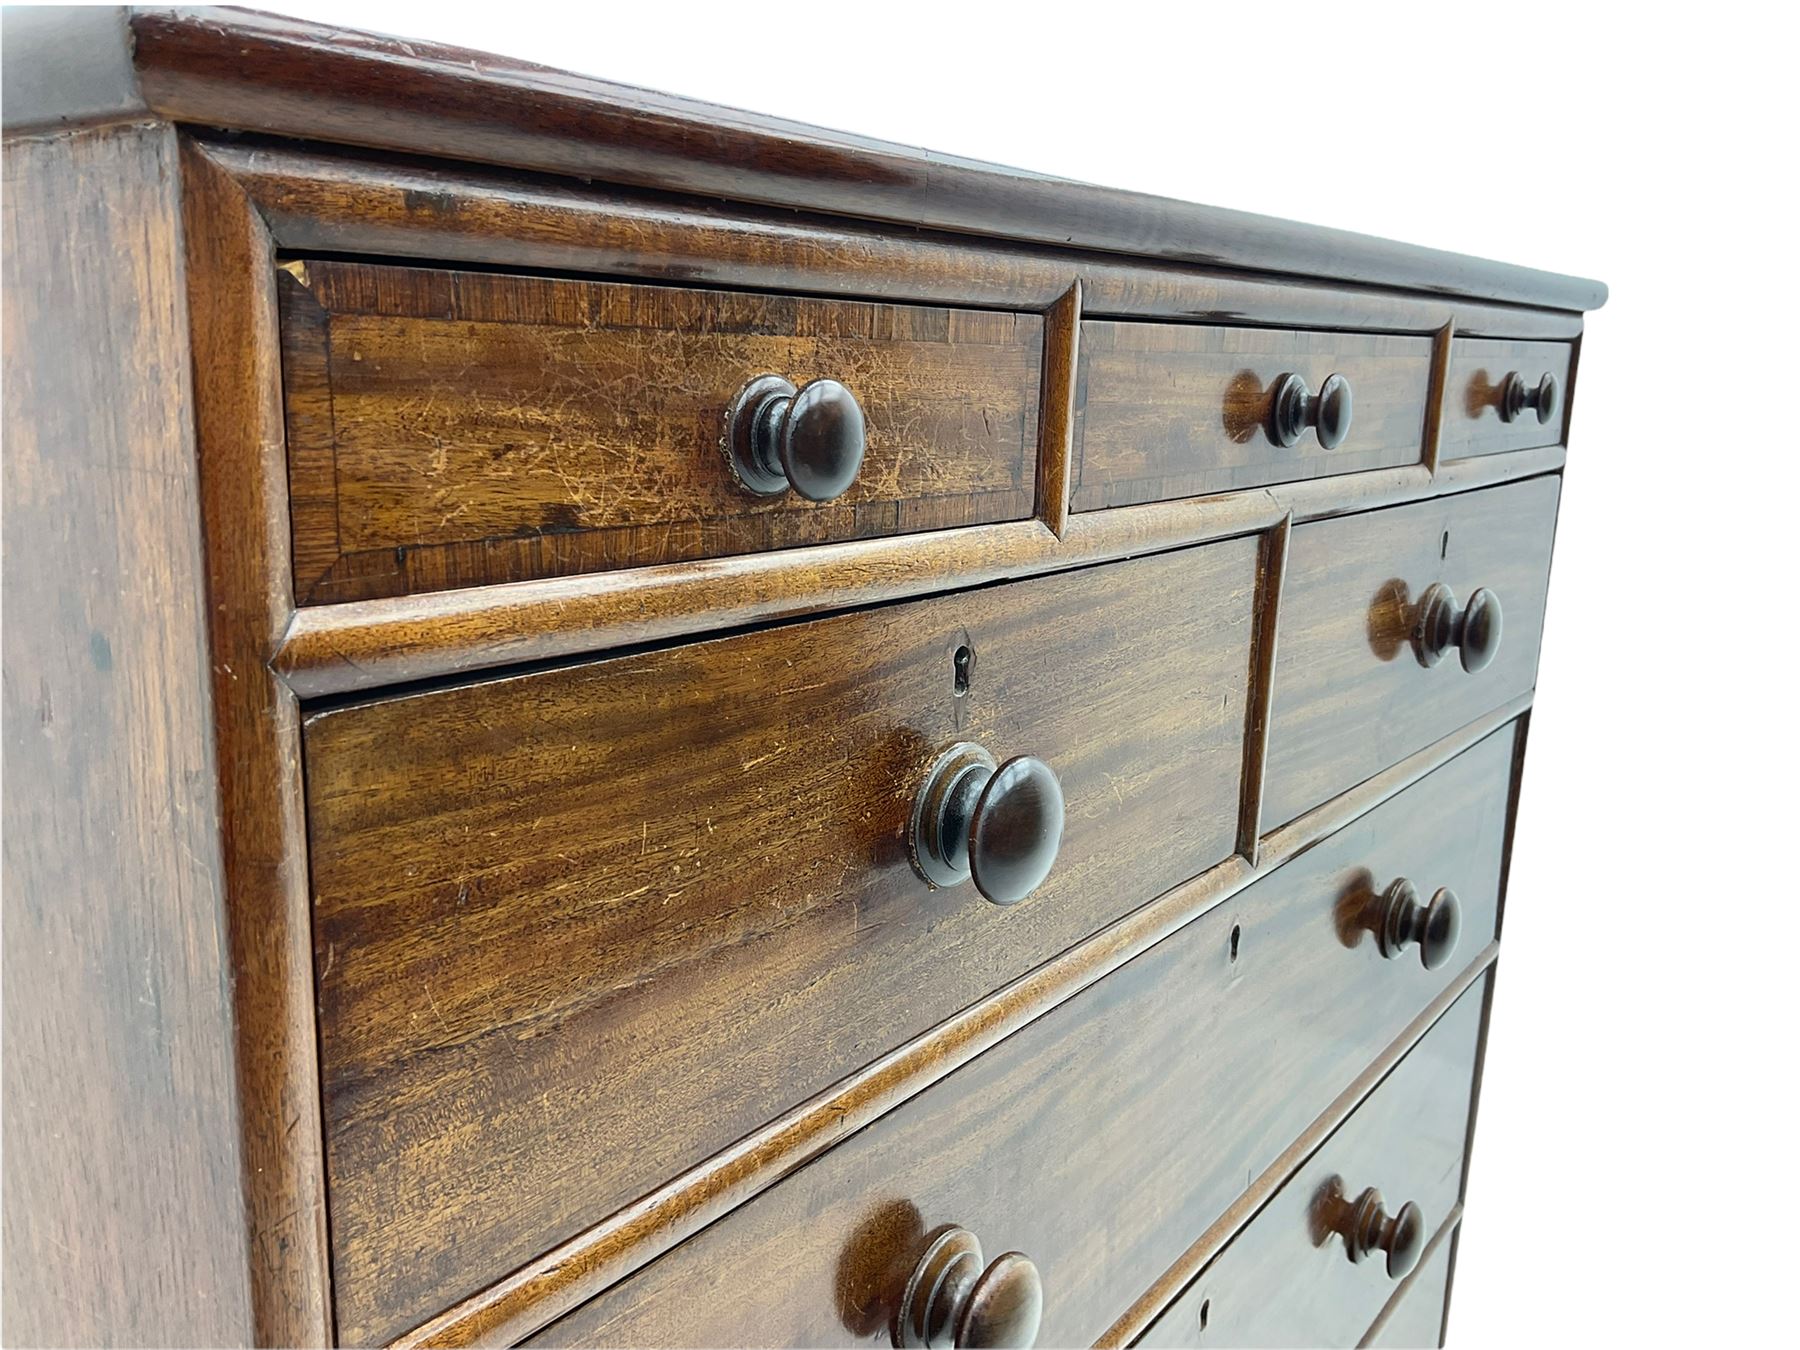 19th century mahogany chest - Image 8 of 14